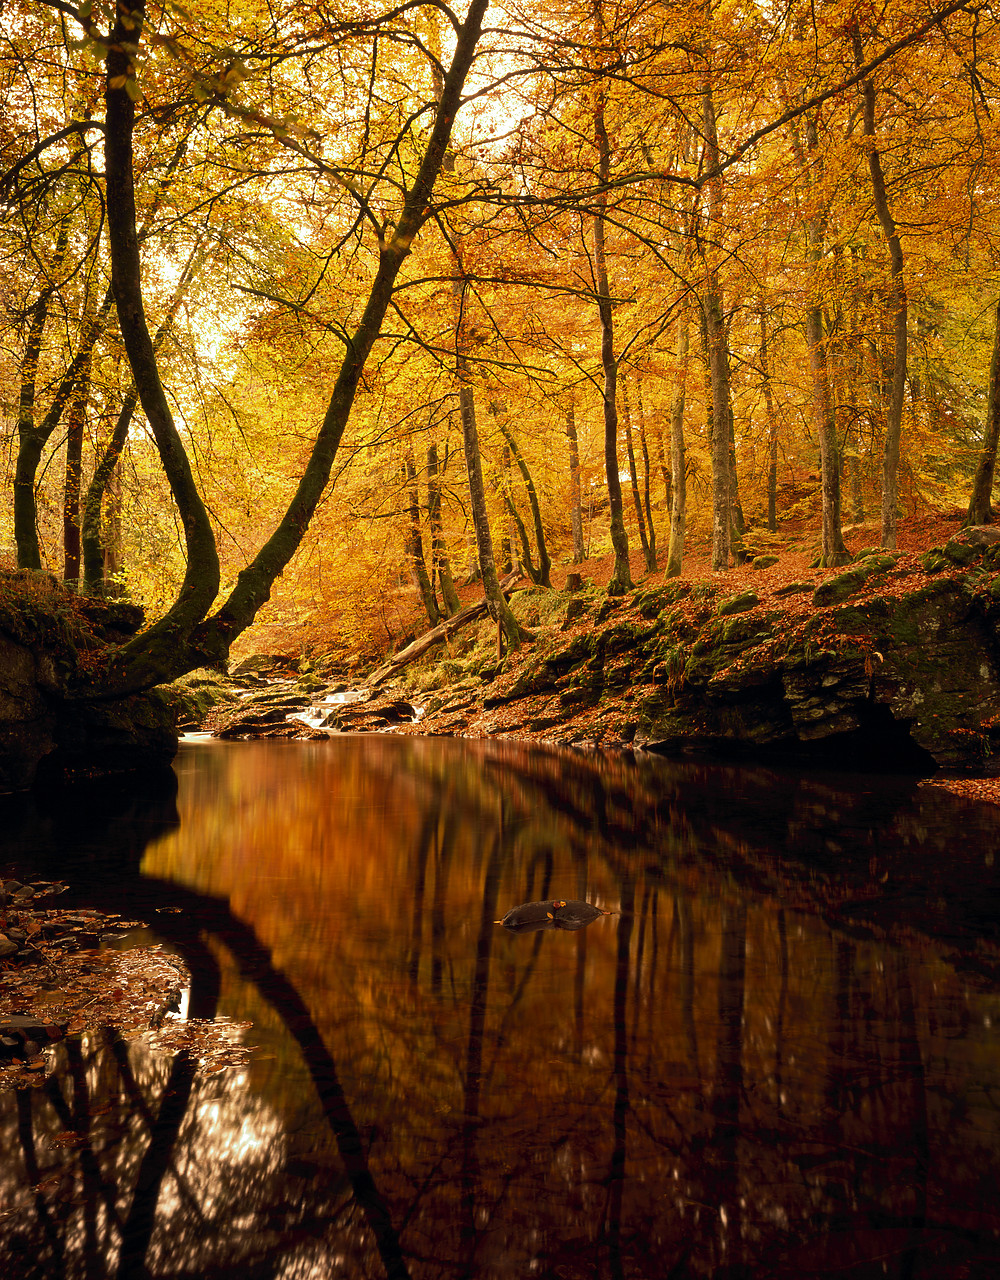 #970486-2 - The Birks of Aberfeldy in Autumn, Aberfeldy, Tayside Region, Scotland